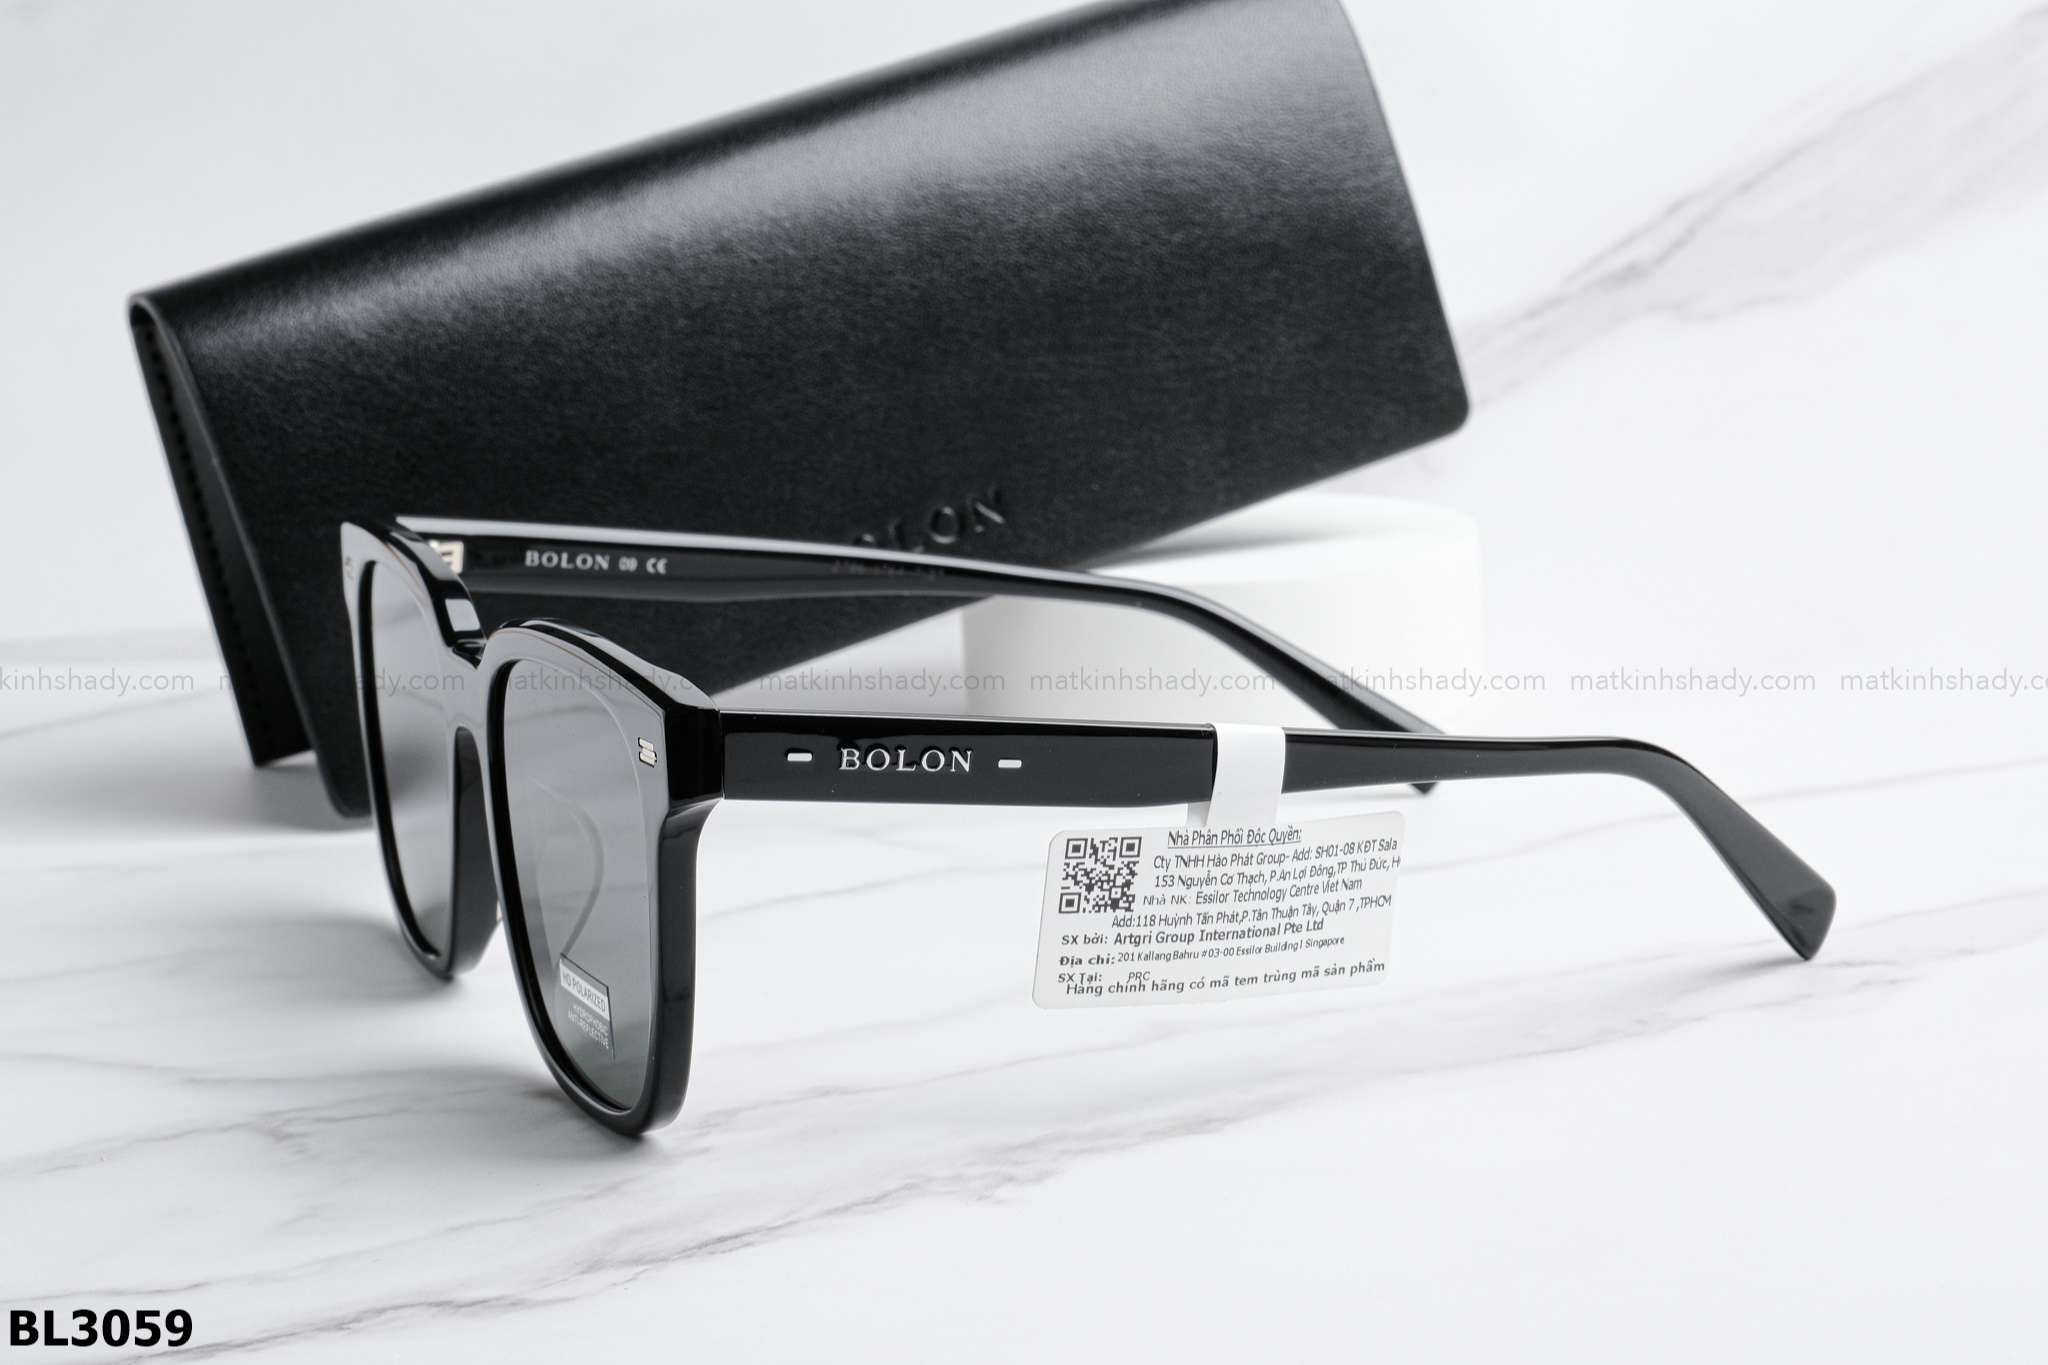  Bolon Eyewear - Sunglasses - BL3059 